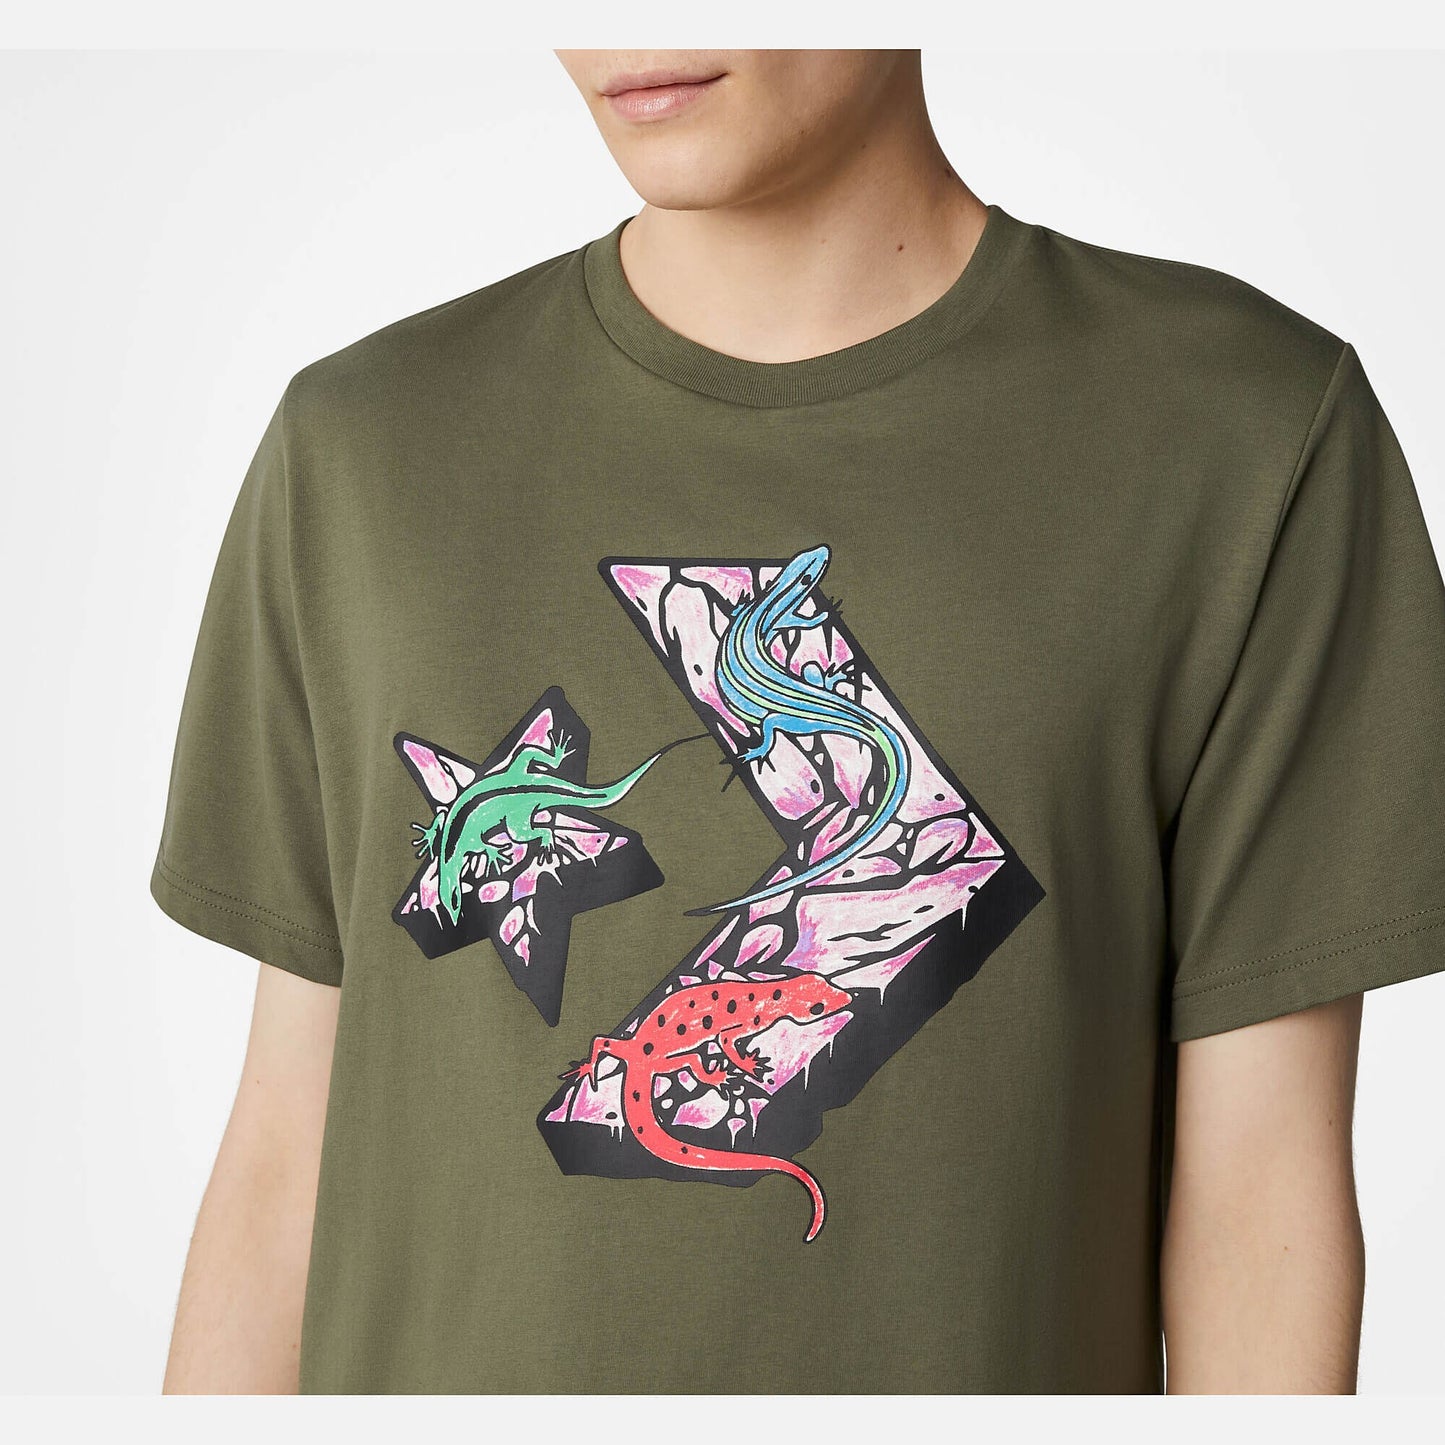 Converse Star Chevron Exotic Lizard Graphic T-Shirt Olive